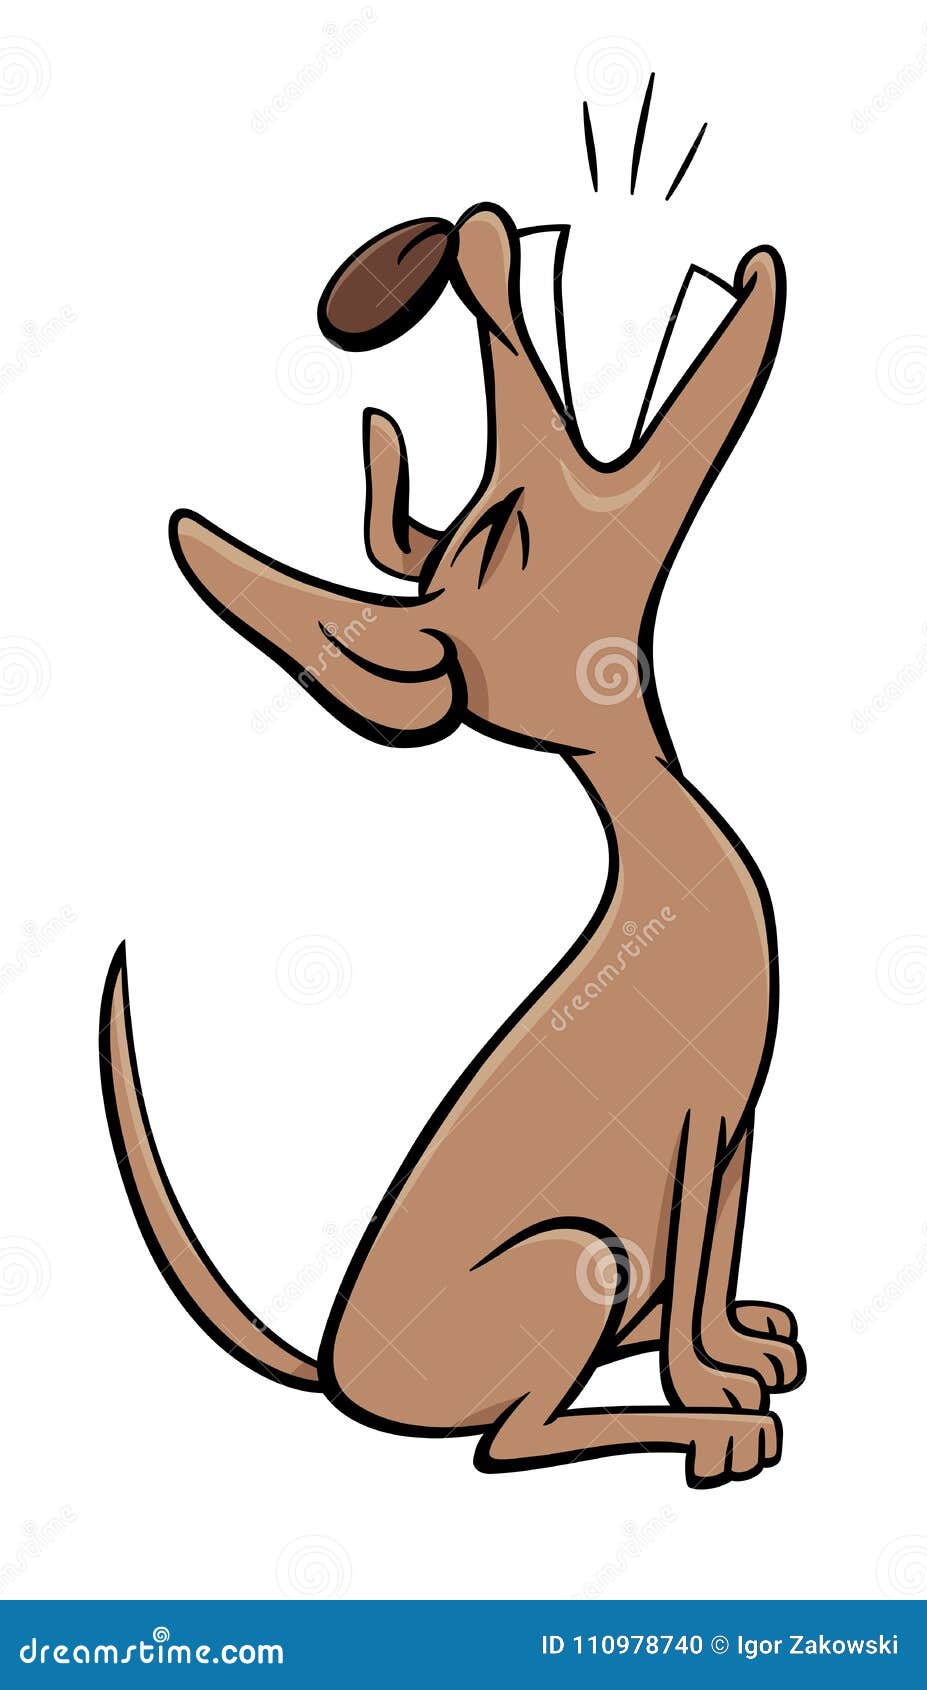 Barking or Howling Dog Cartoon Character Stock Vector - Illustration of ...